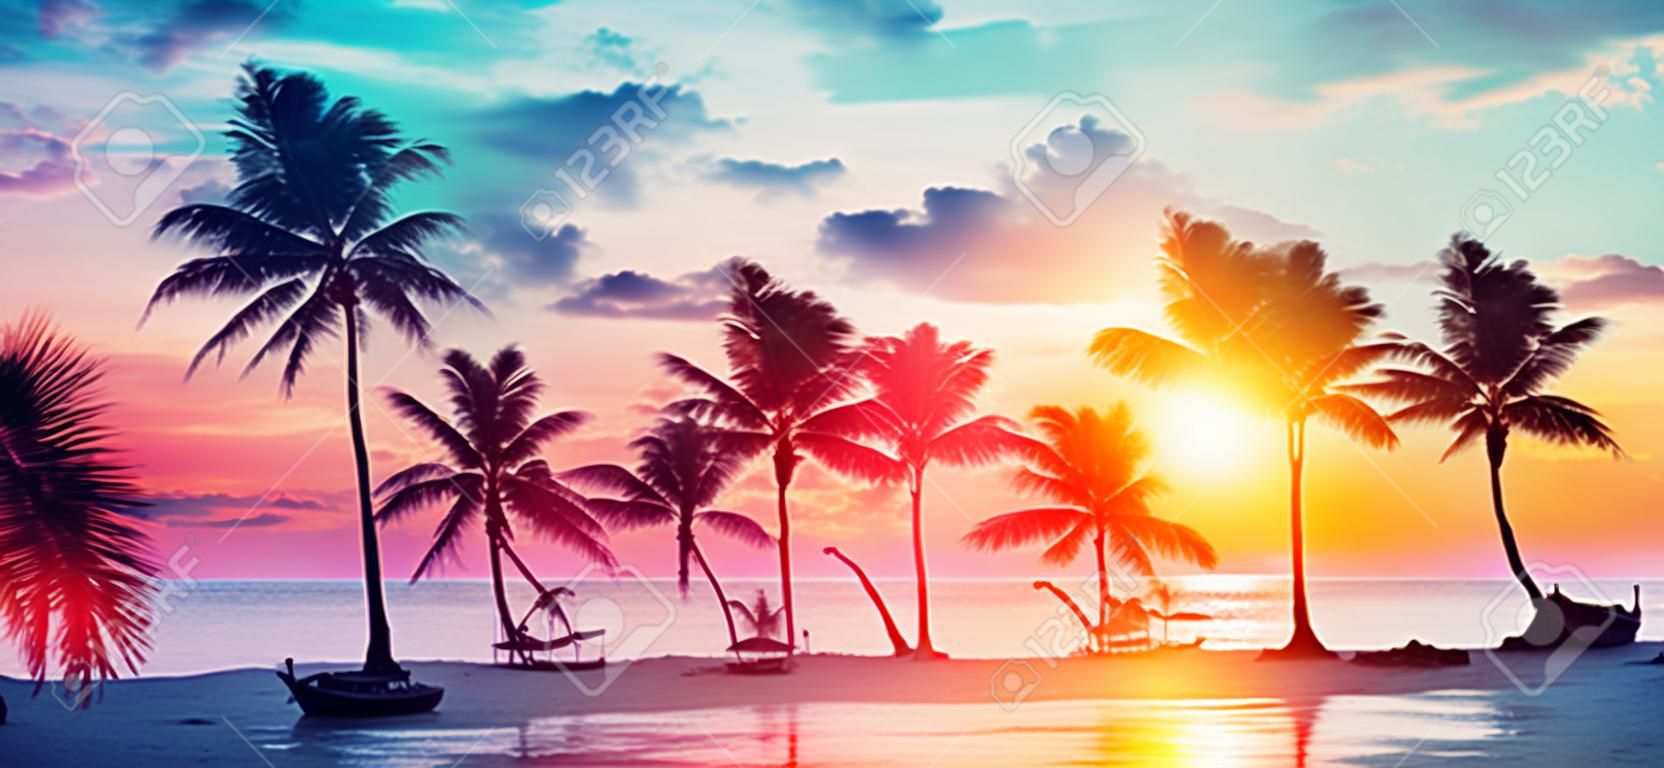 Palmbomen Silhouettes op tropisch strand bij zonsondergang - Moderne vintage kleuren